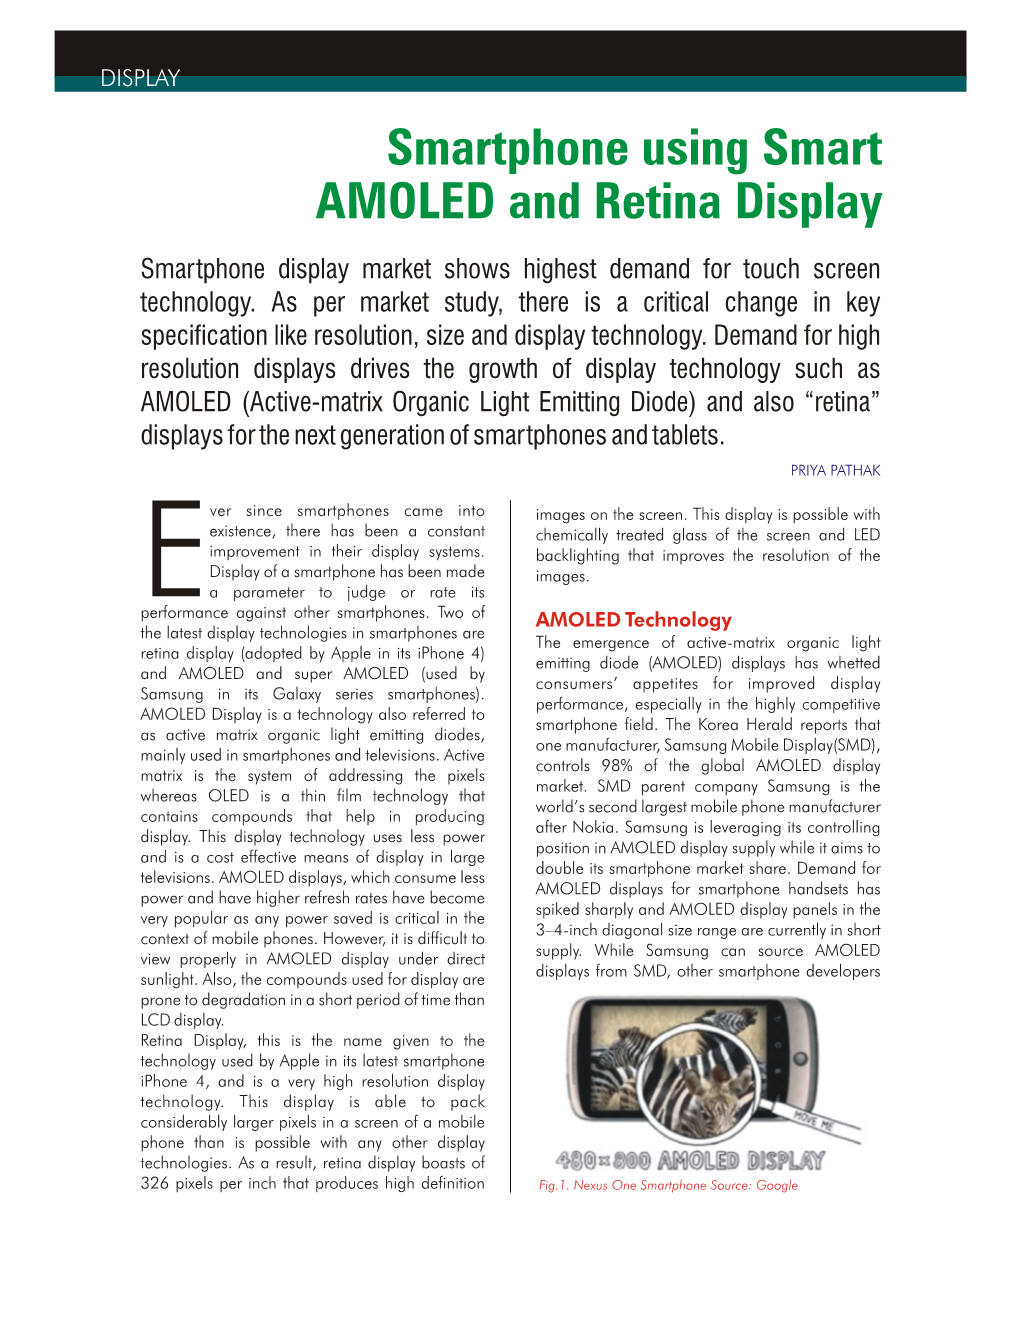 Smartphone Using Smart AMOLED and Retina Display